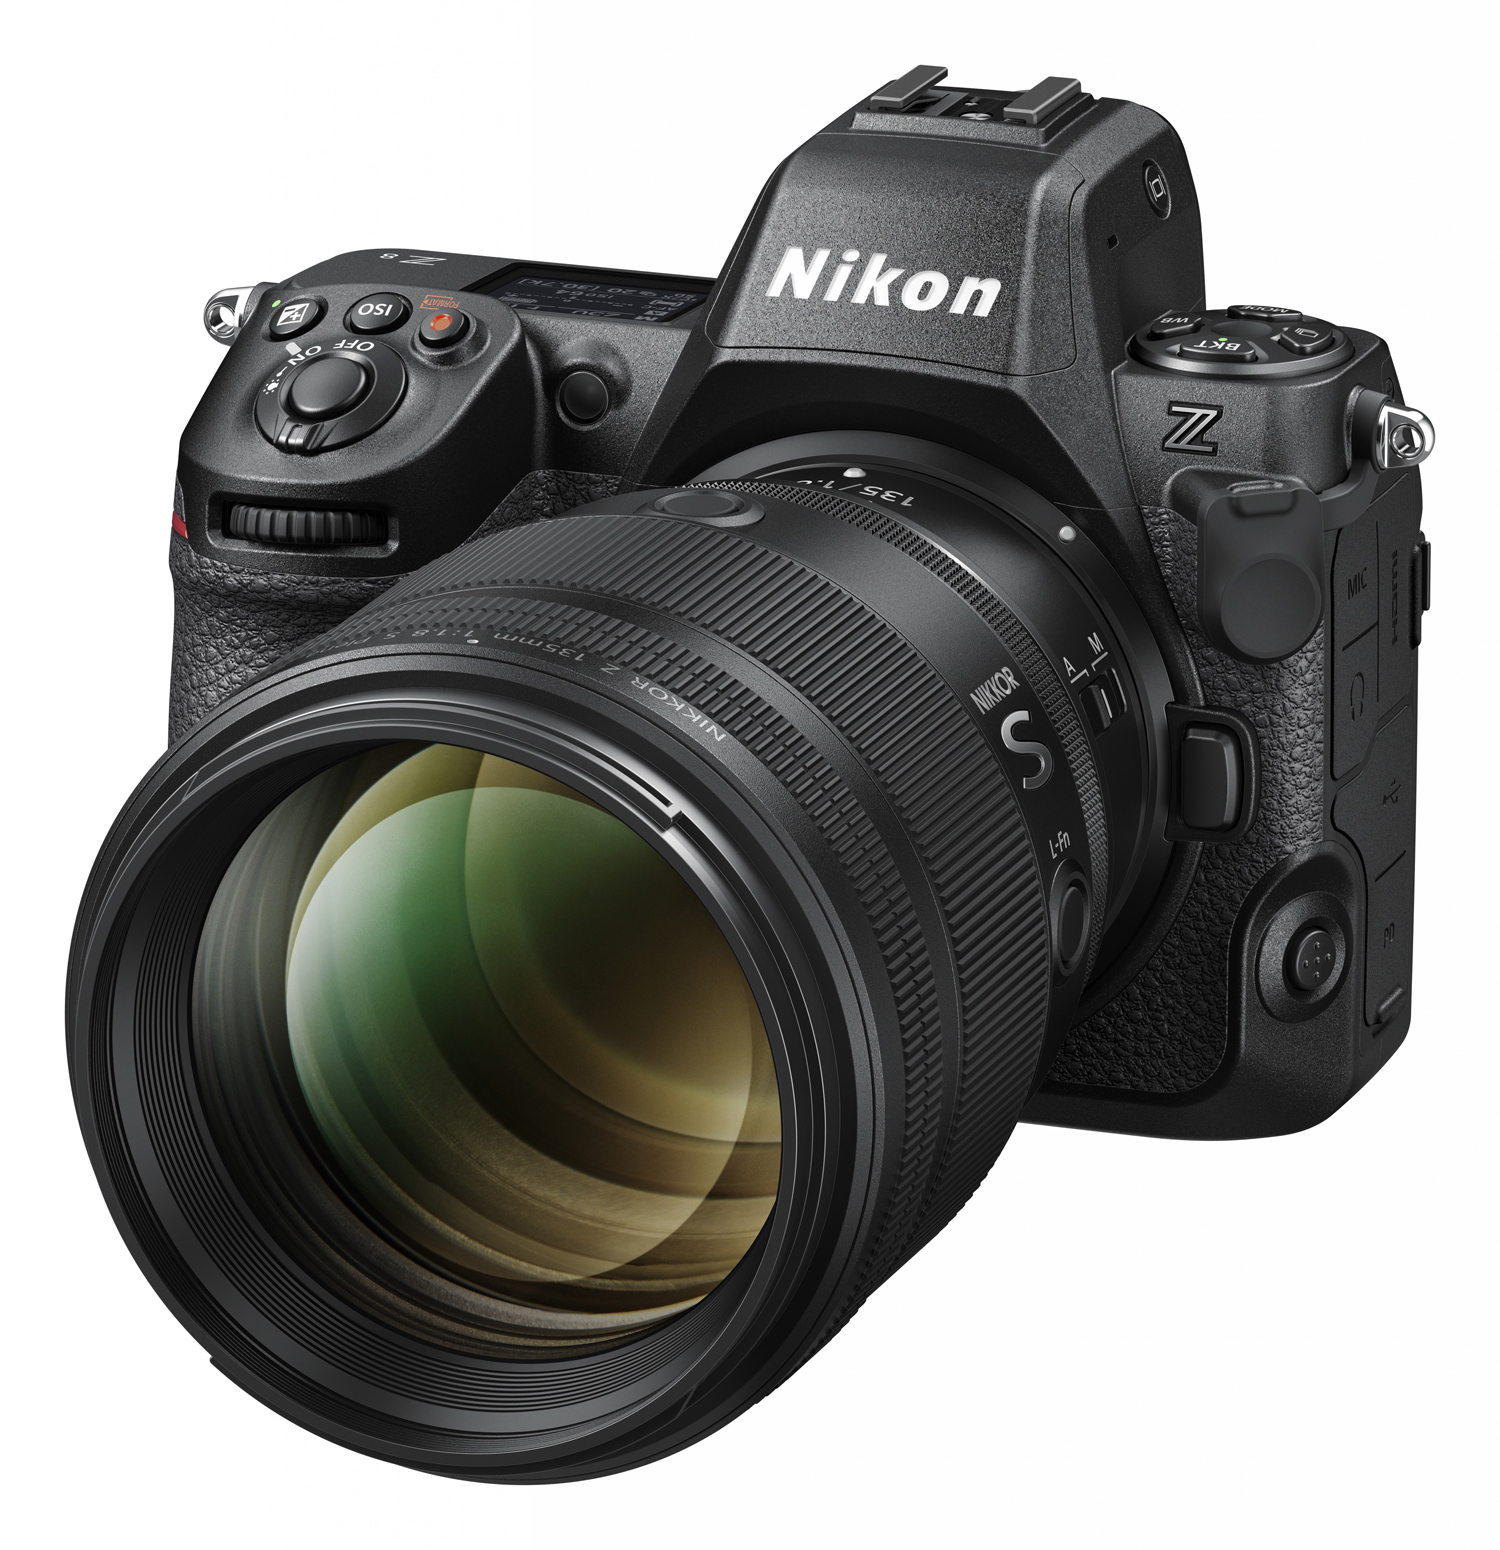 Nikkor Z 135 mm f/1.8 S Plena with a Nikon Z8 camera.